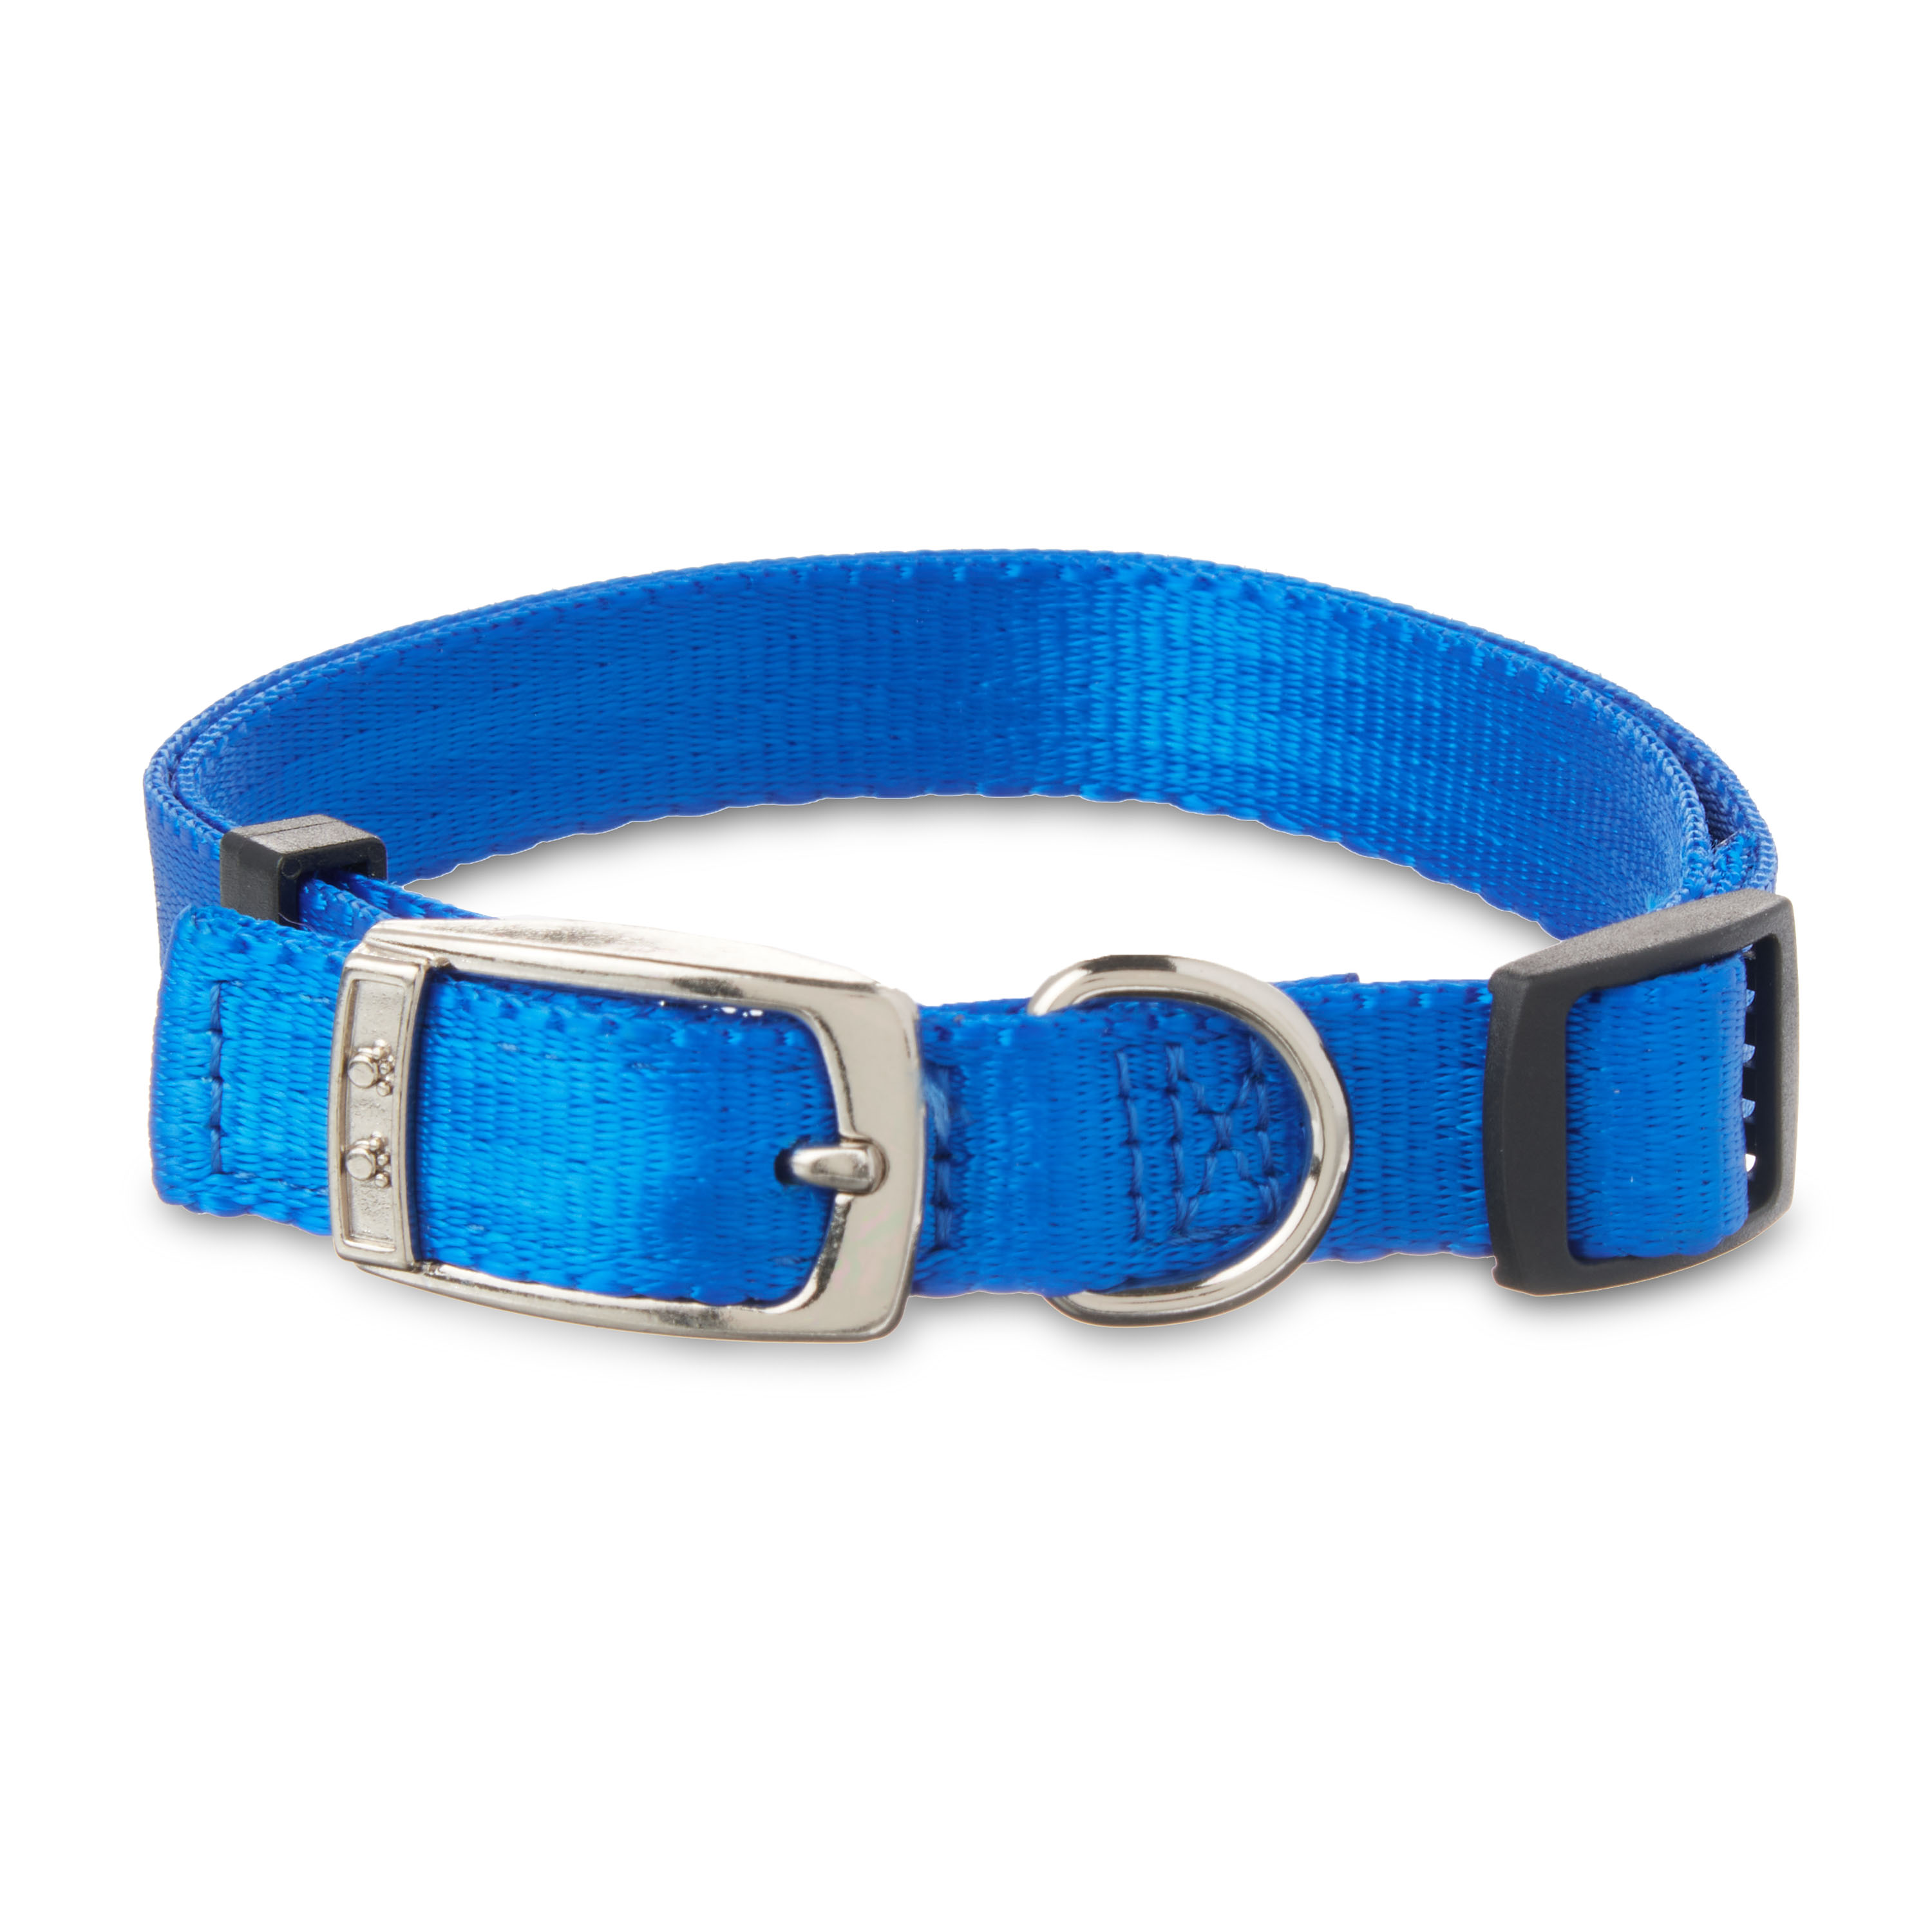 Vibrant Life Solid Nylon Dog Collar with Metal Buckle, Blue, Medium - image 1 of 7